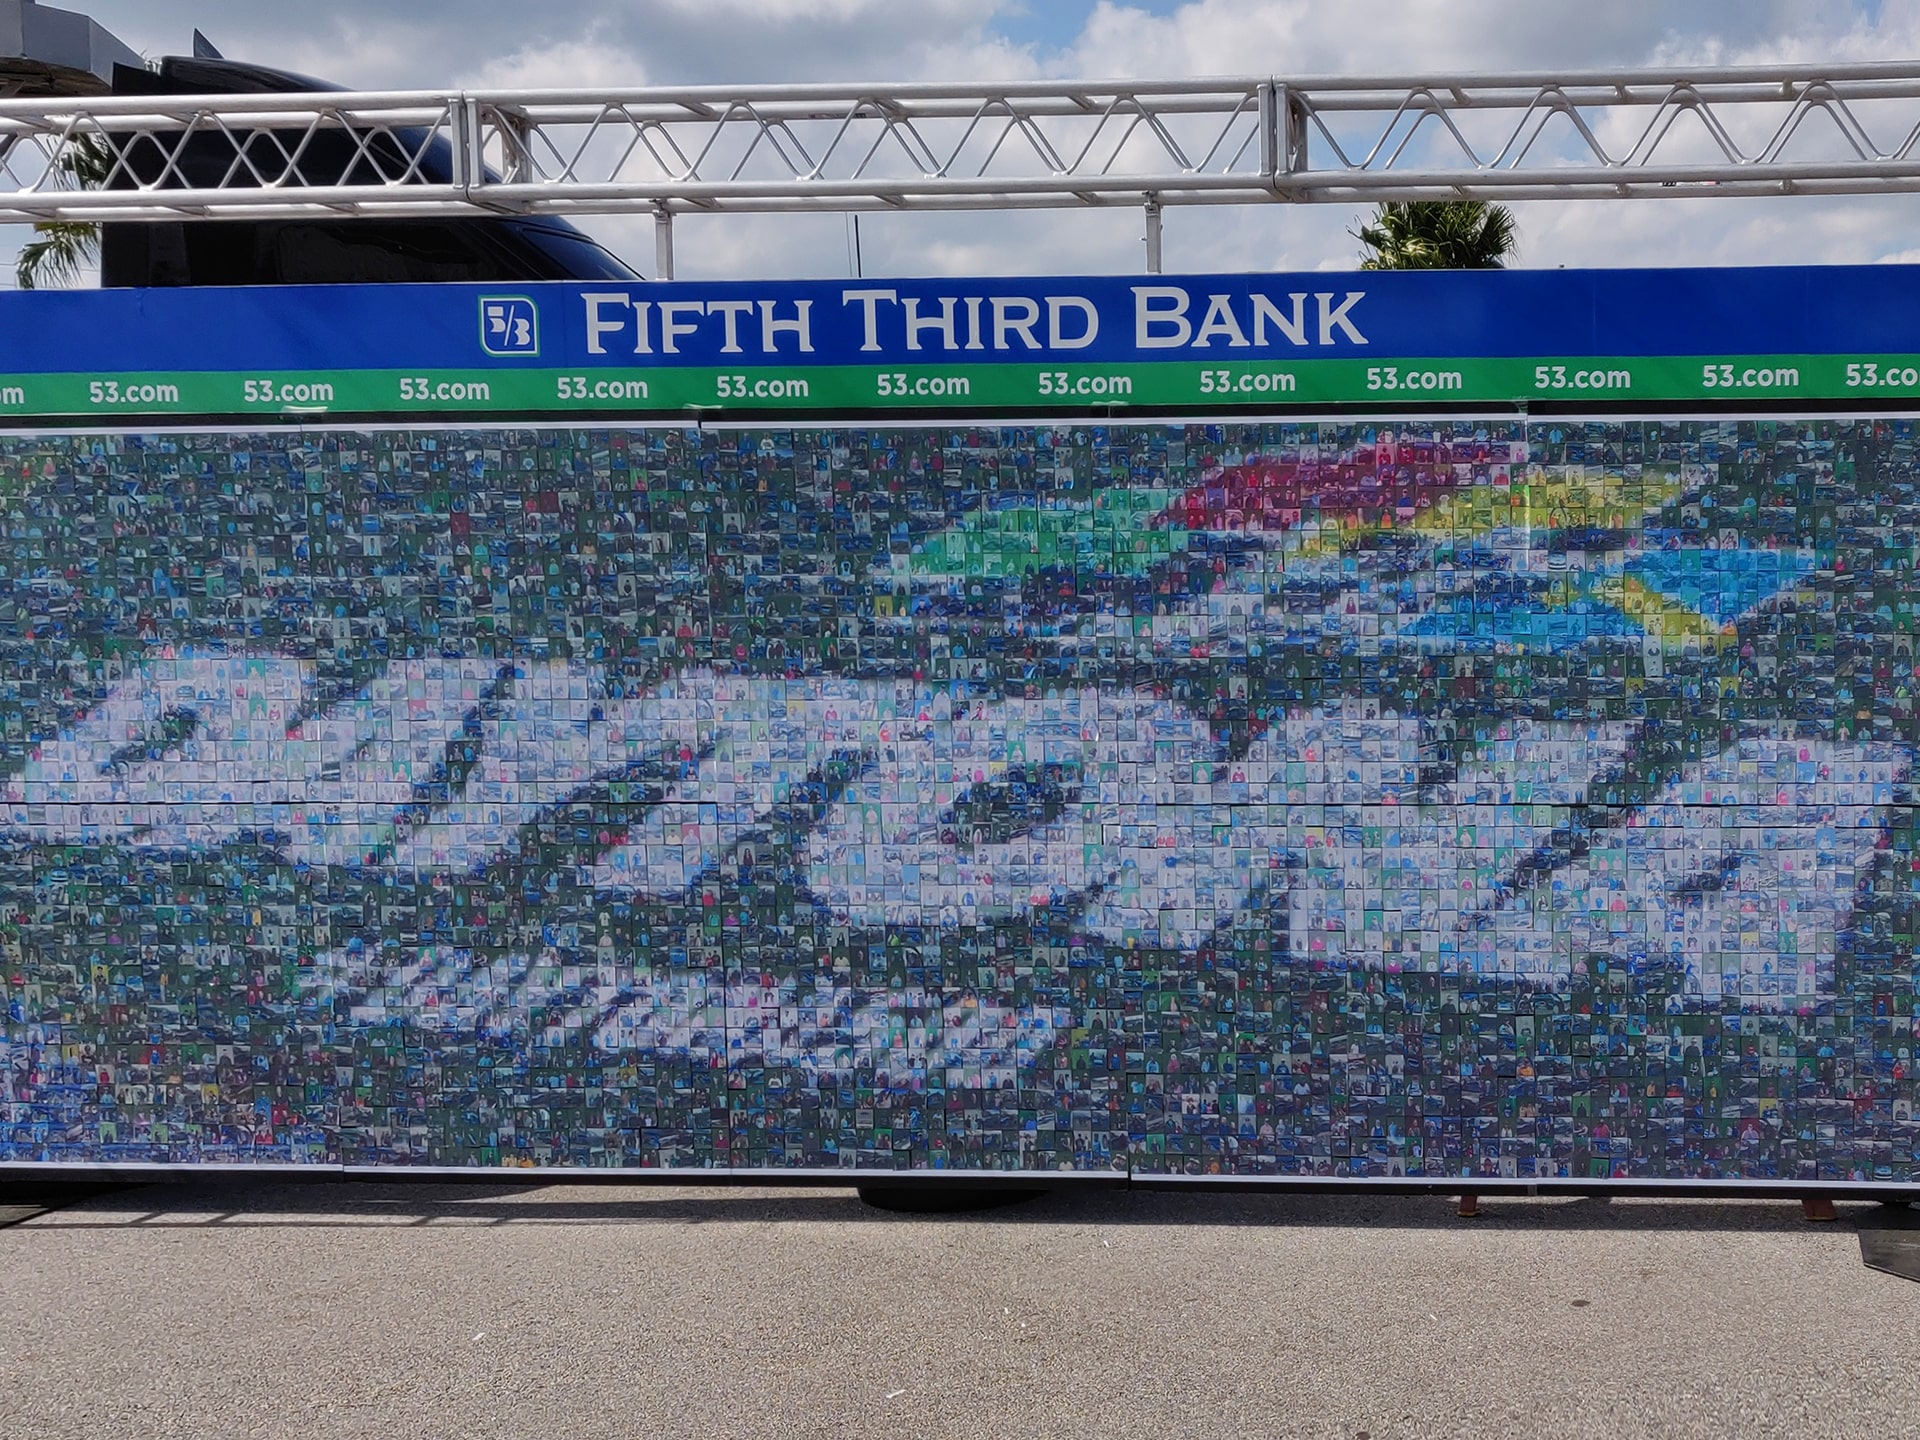 Live Event Mosaic: Daytona 500